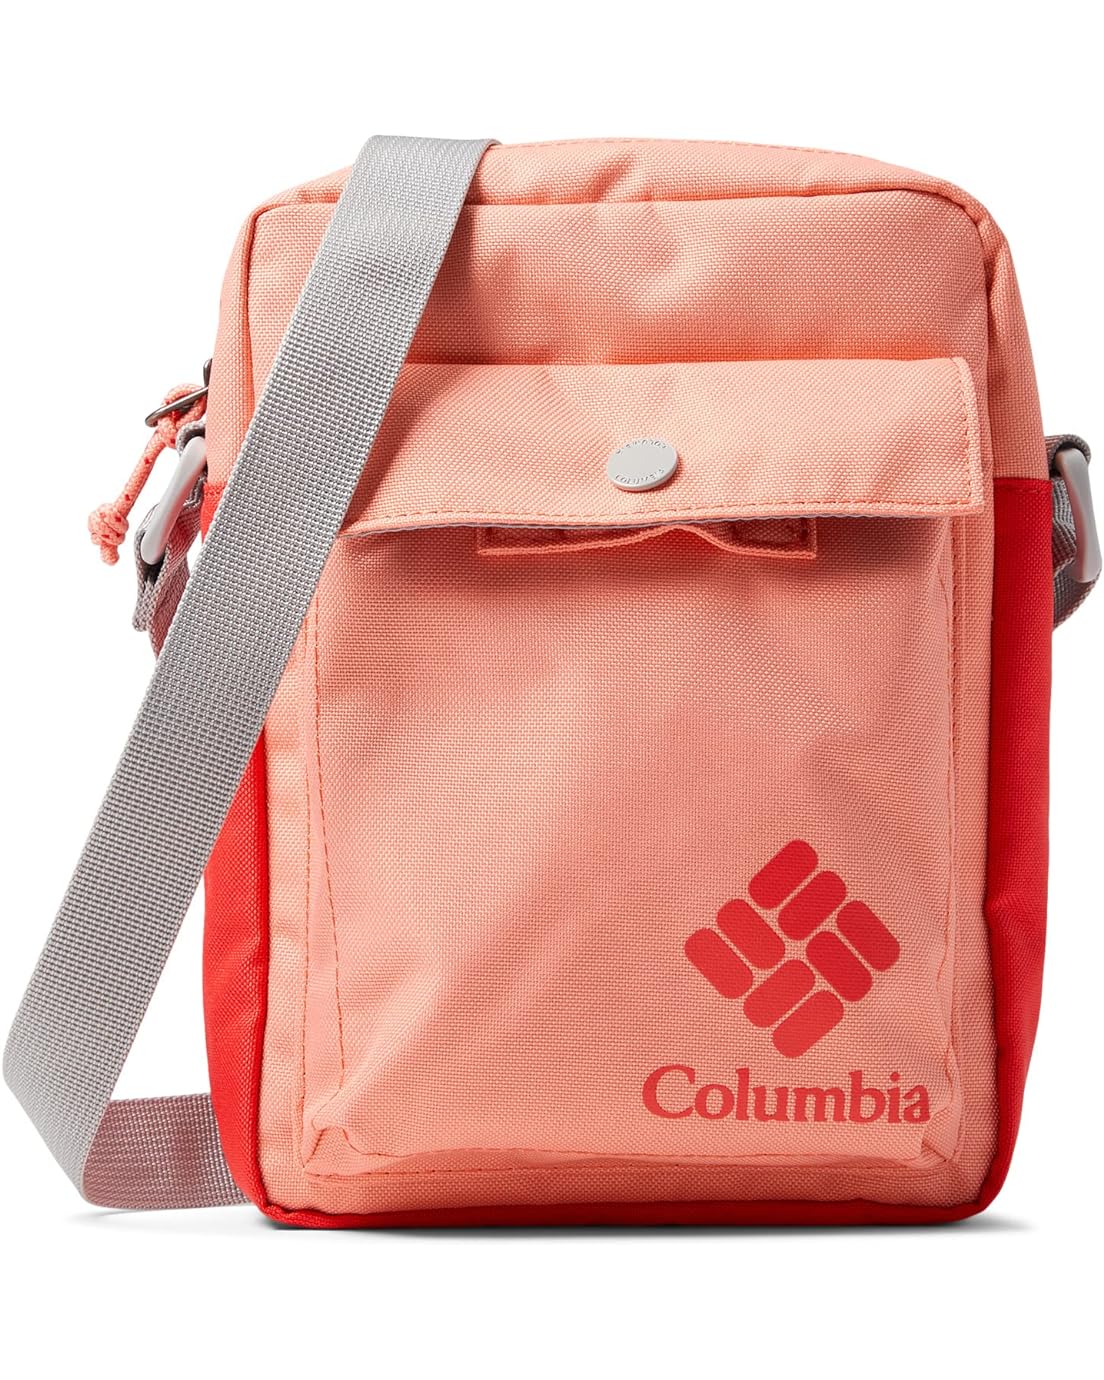 Columbia Zigzag Side Bag